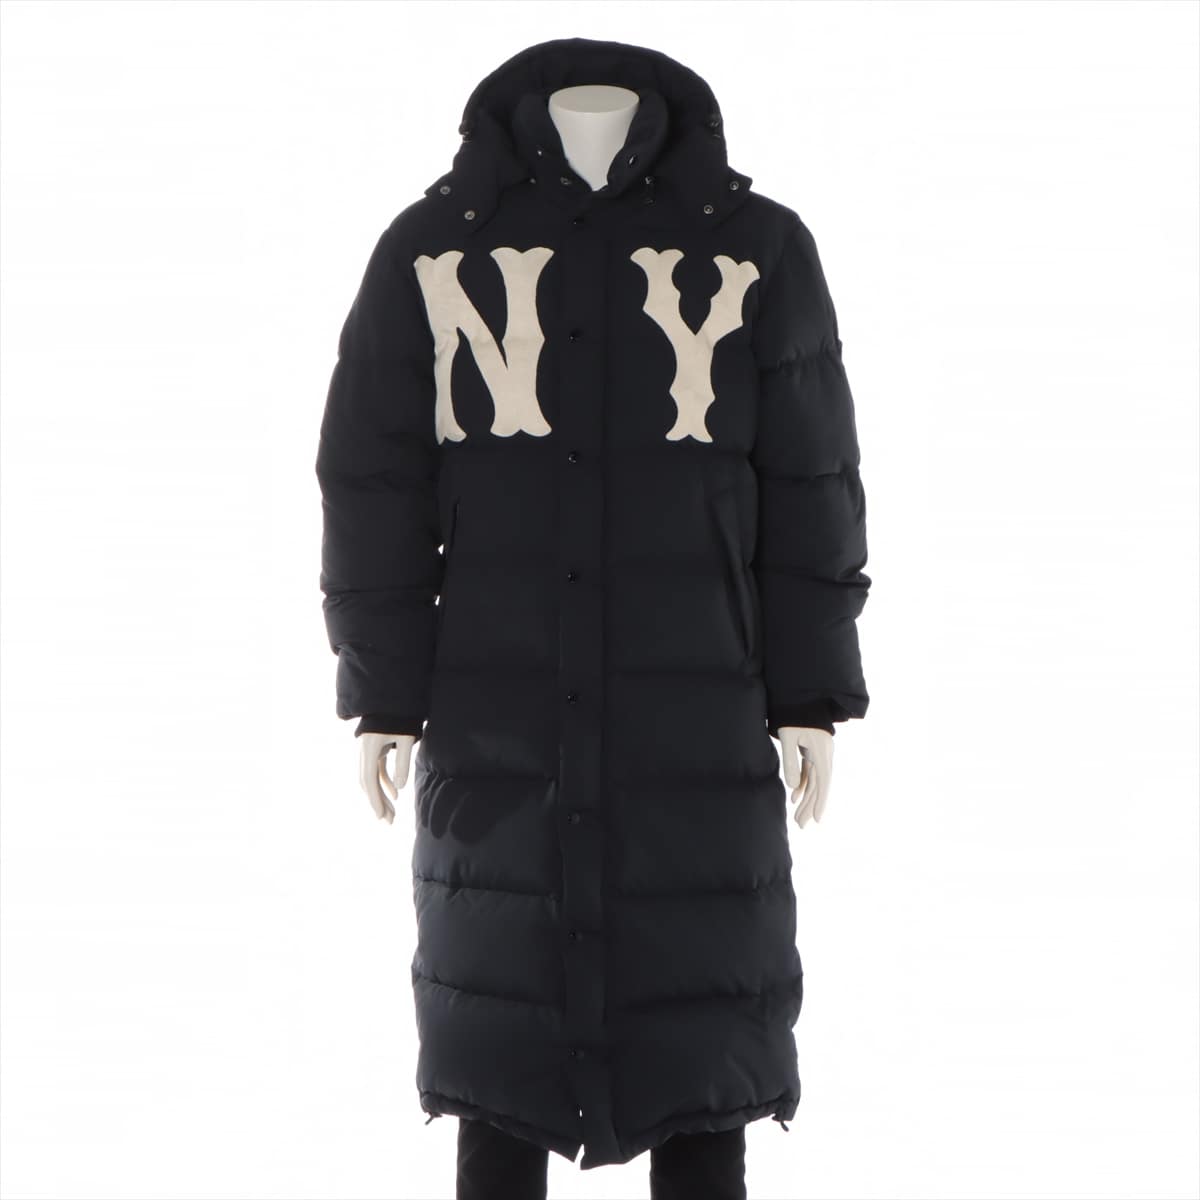 Gucci x New York Yankees 18AW Nylon Down coat 44 Men's Navy blue  logo patch